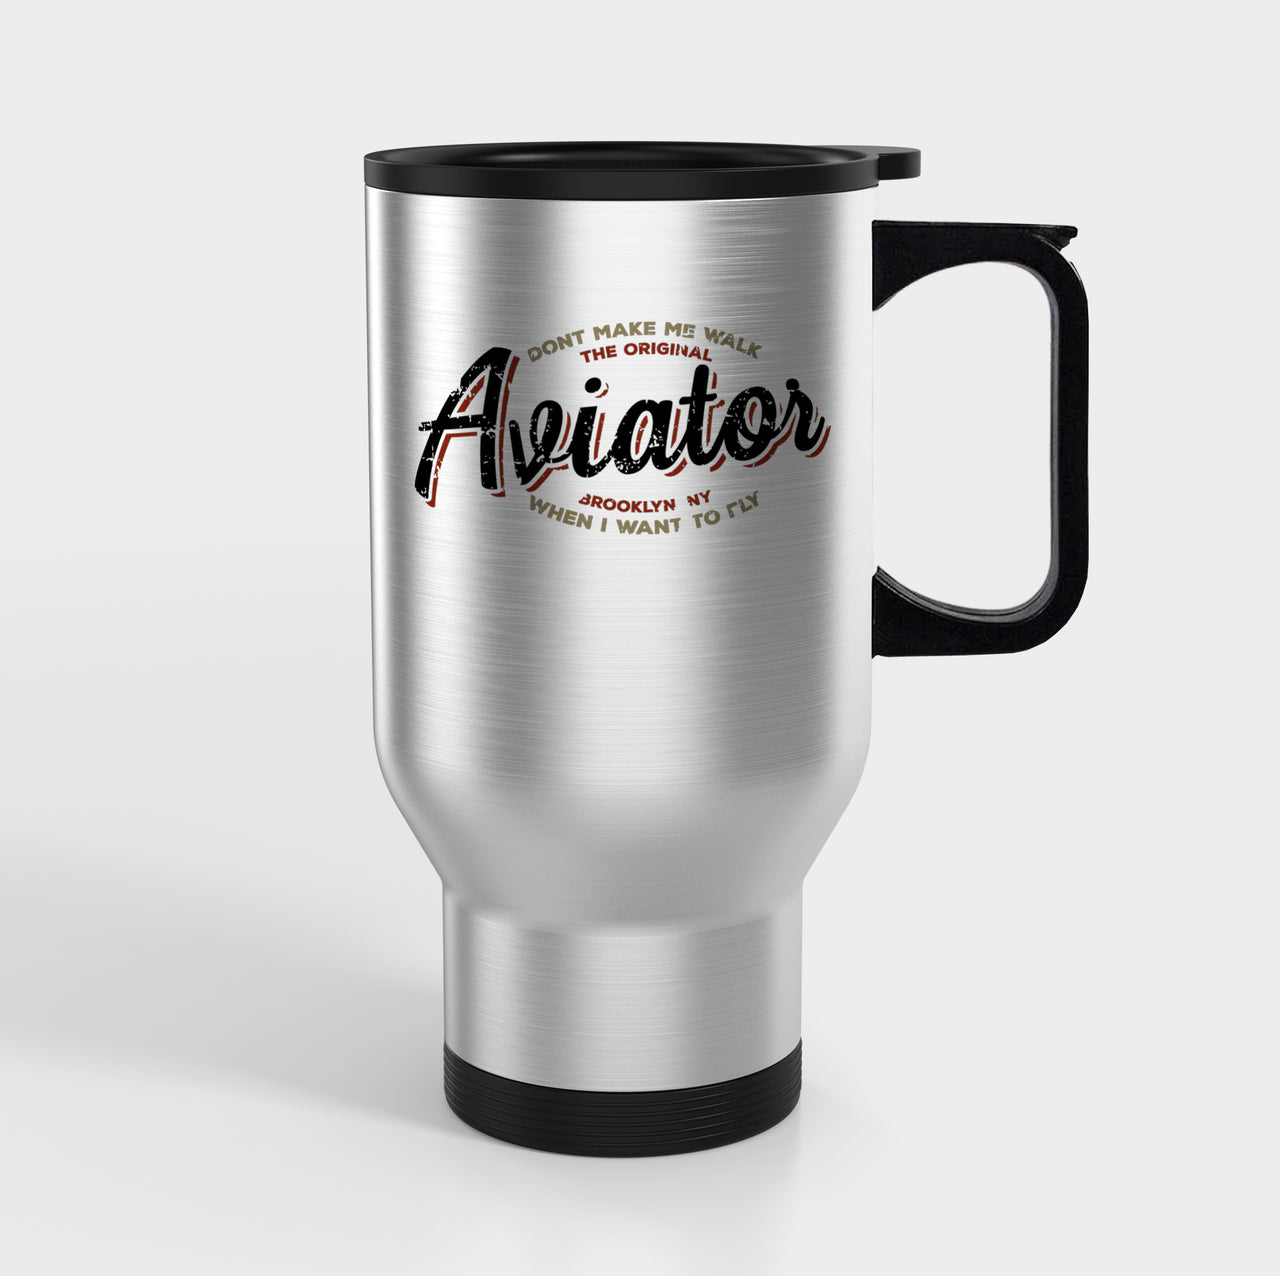 Aviator - Dont Make Me Walk Designed Travel Mugs (With Holder)